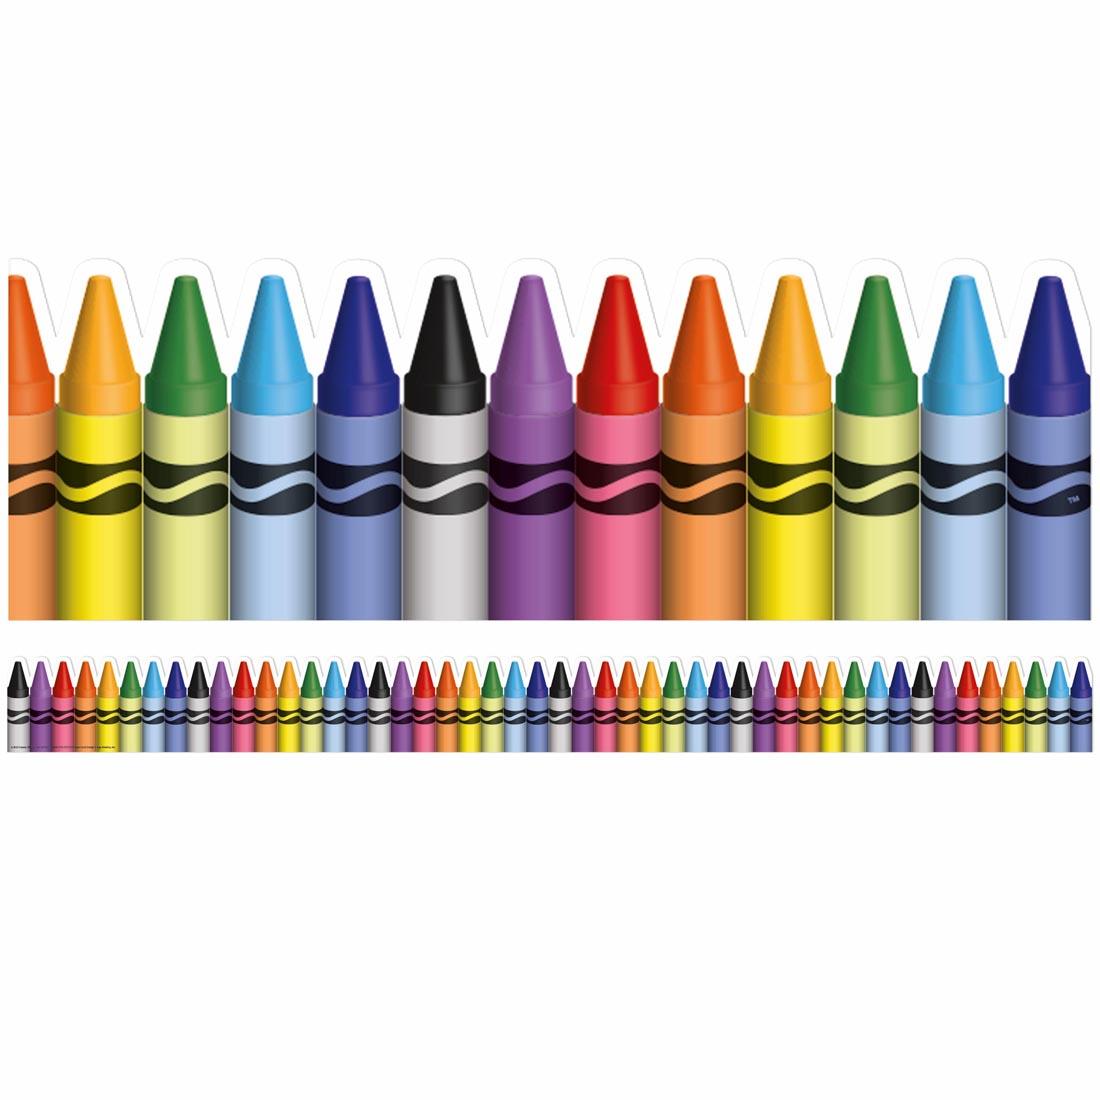  Crayola Crayons, 48 Count, School Supplies For Kids